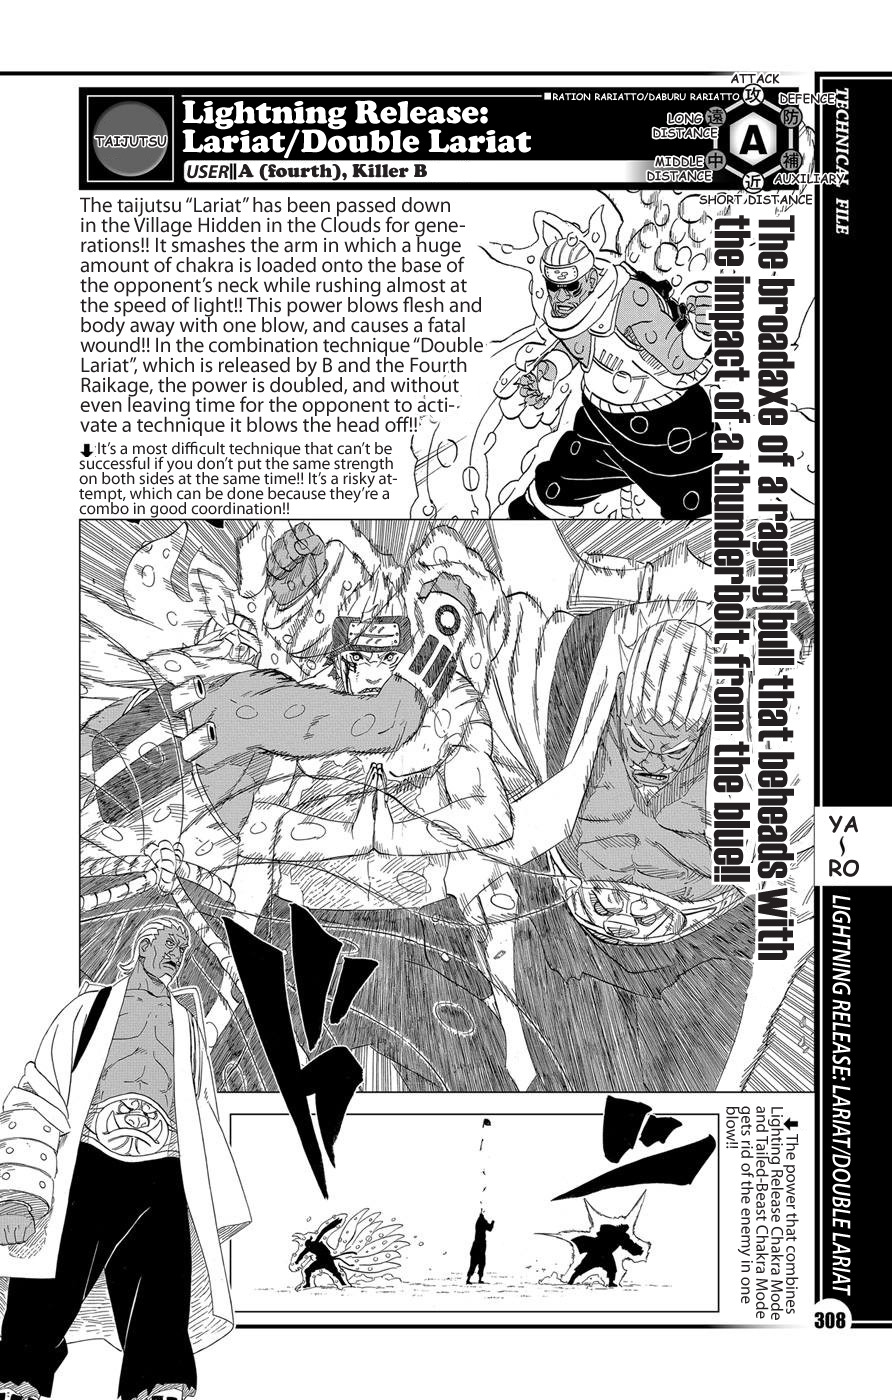 3-Tsunade - Qual kunoichi tem o melhor taijutsu do mangá? RE: Tsunade - Página 2 Tumblr_p6rw84fiMR1urljpmo1_1280